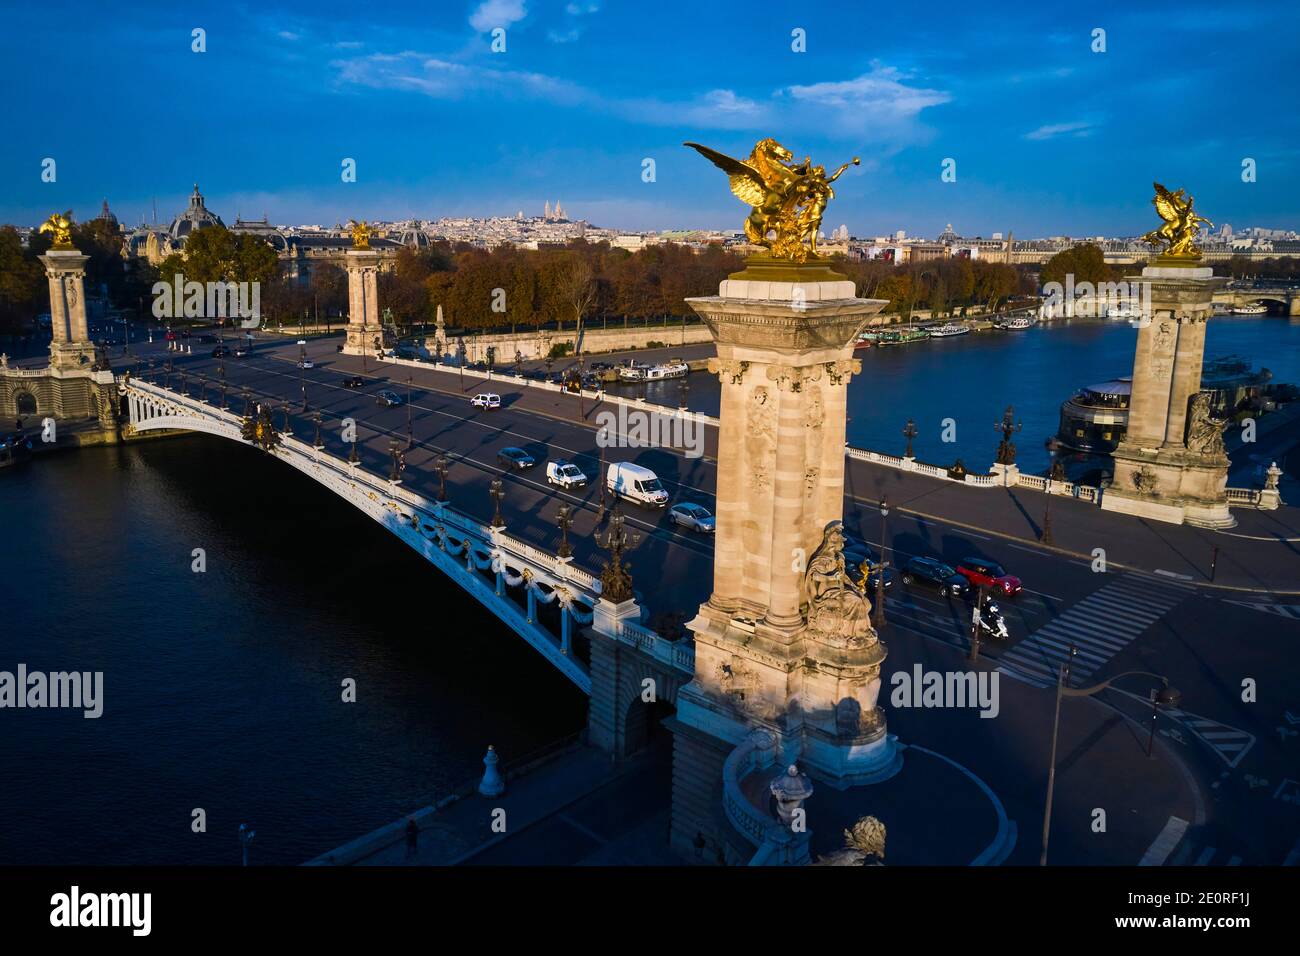 France, Paris, Alexandre III bridge Stock Photo